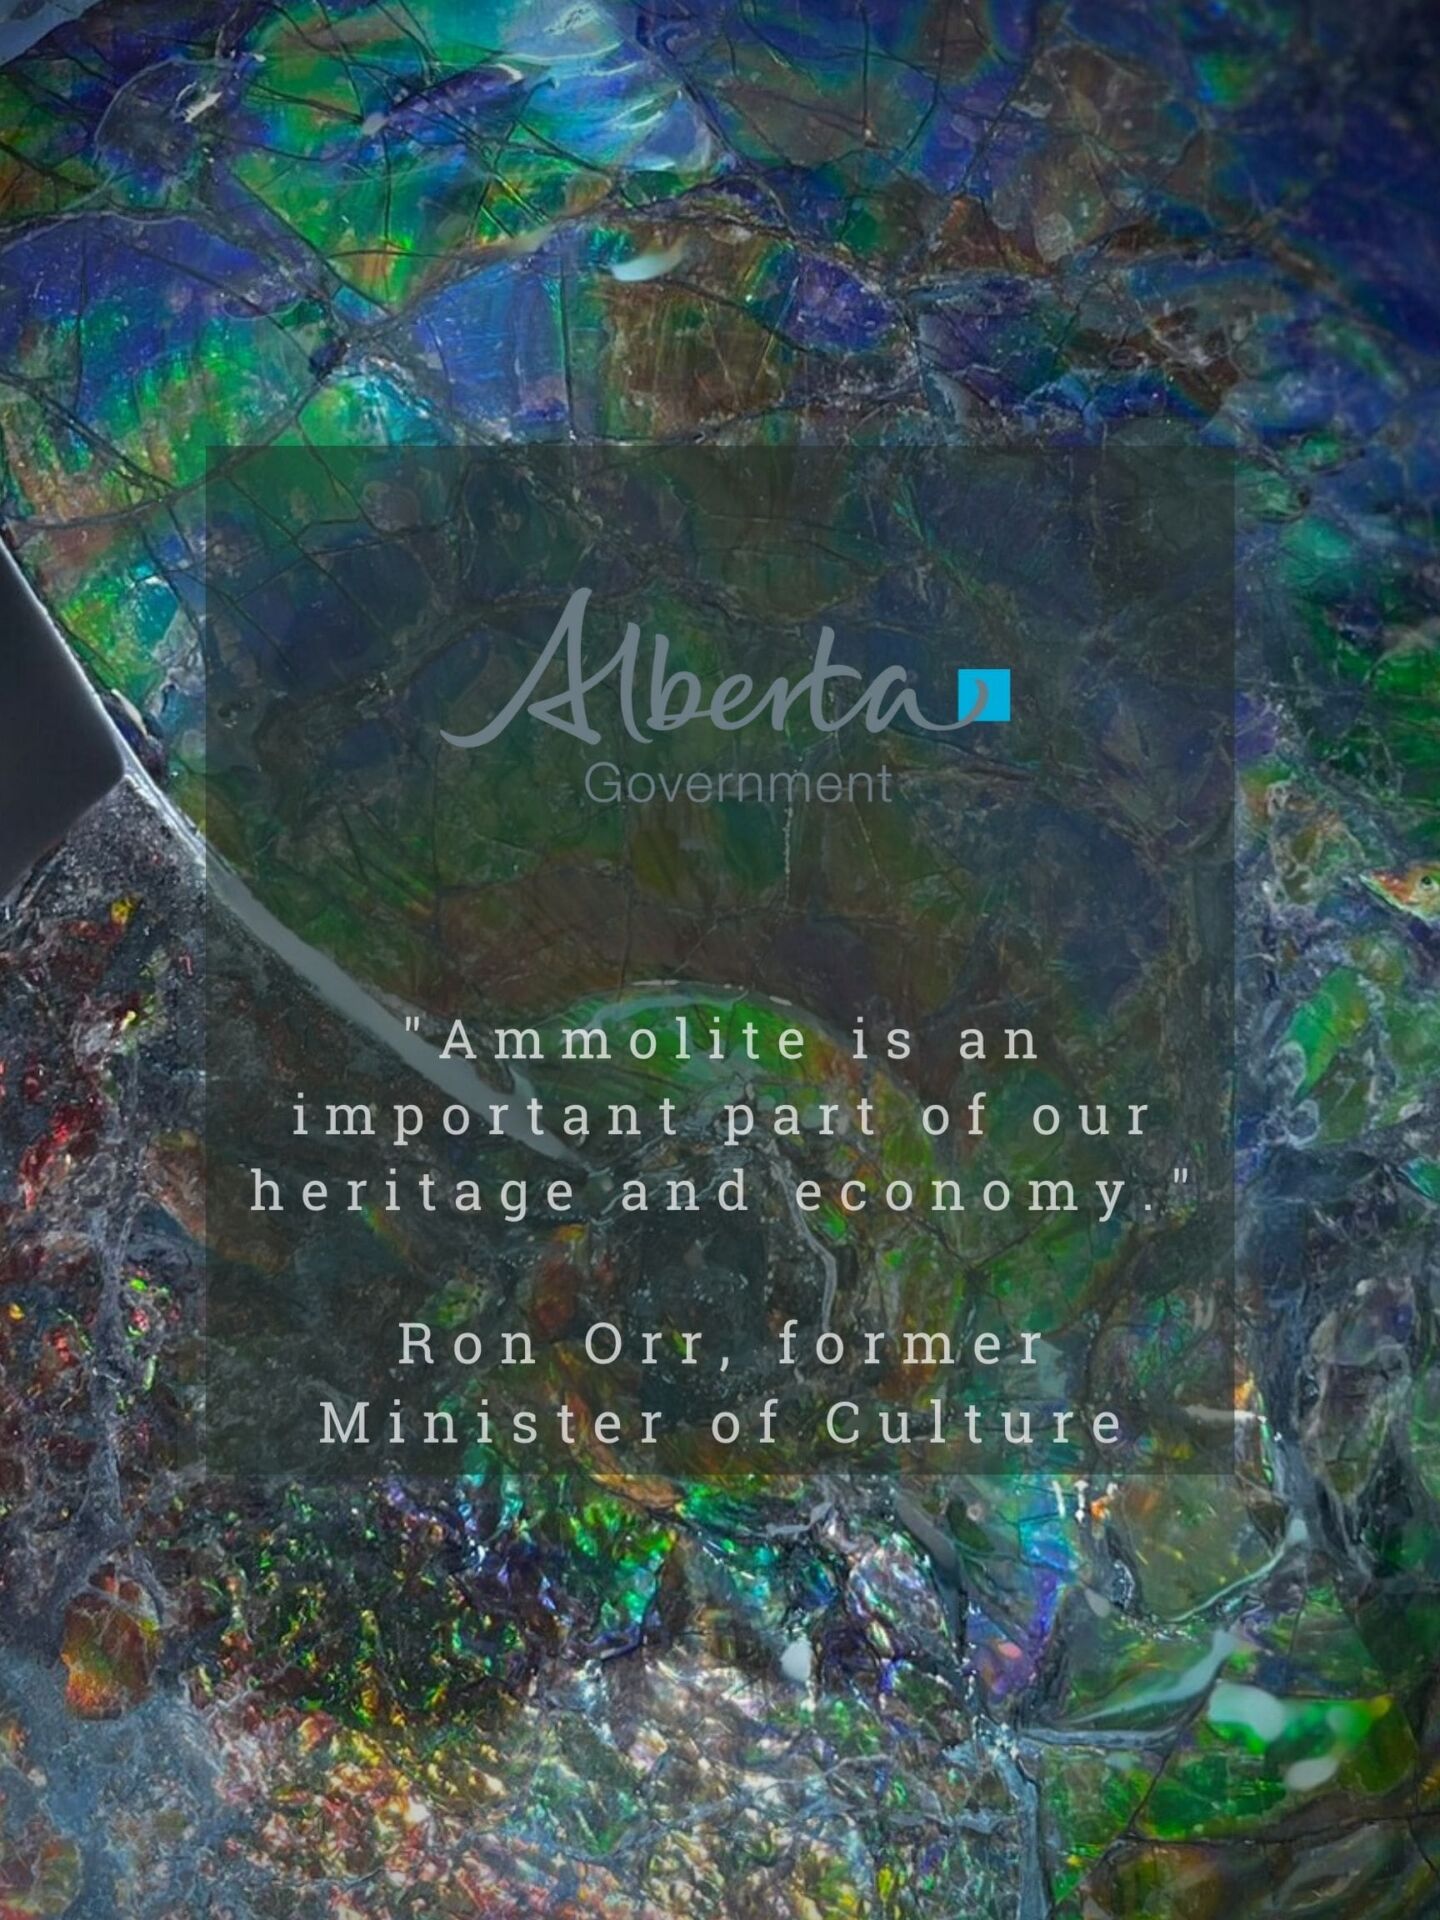 Alberta Ammolite Announcement